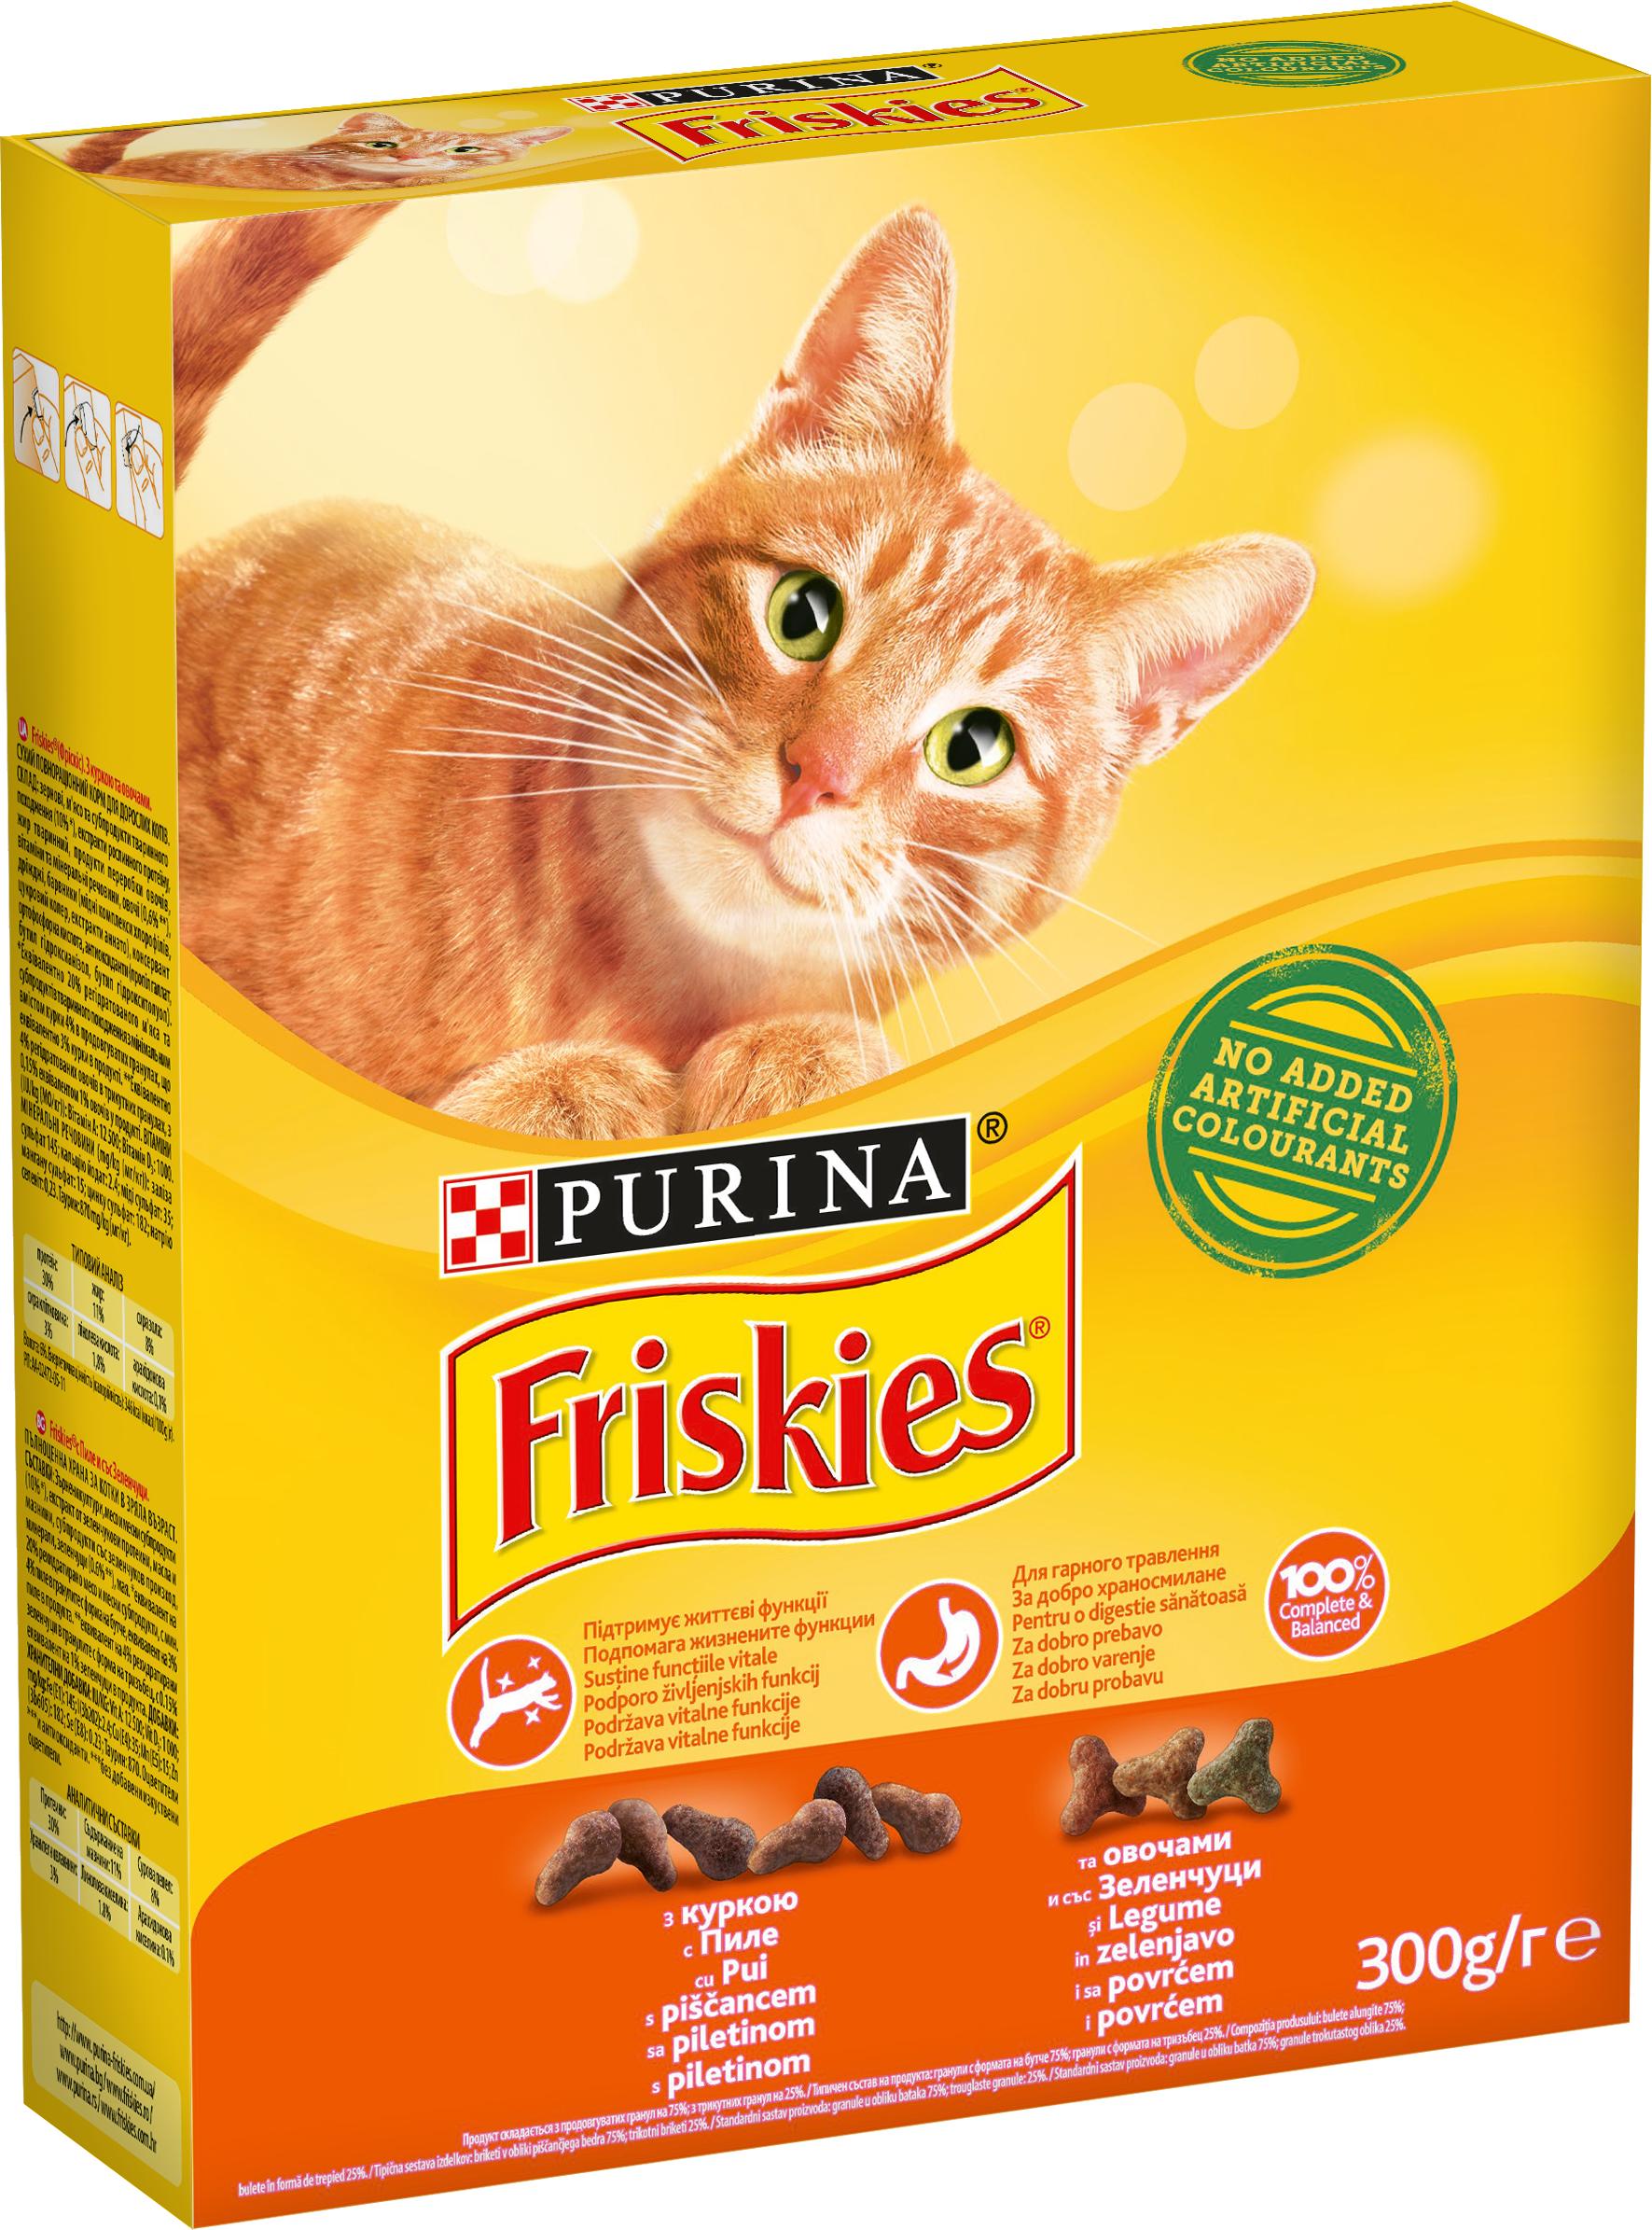 Slika za Hrana za mačke Friskies granule piletina 300g